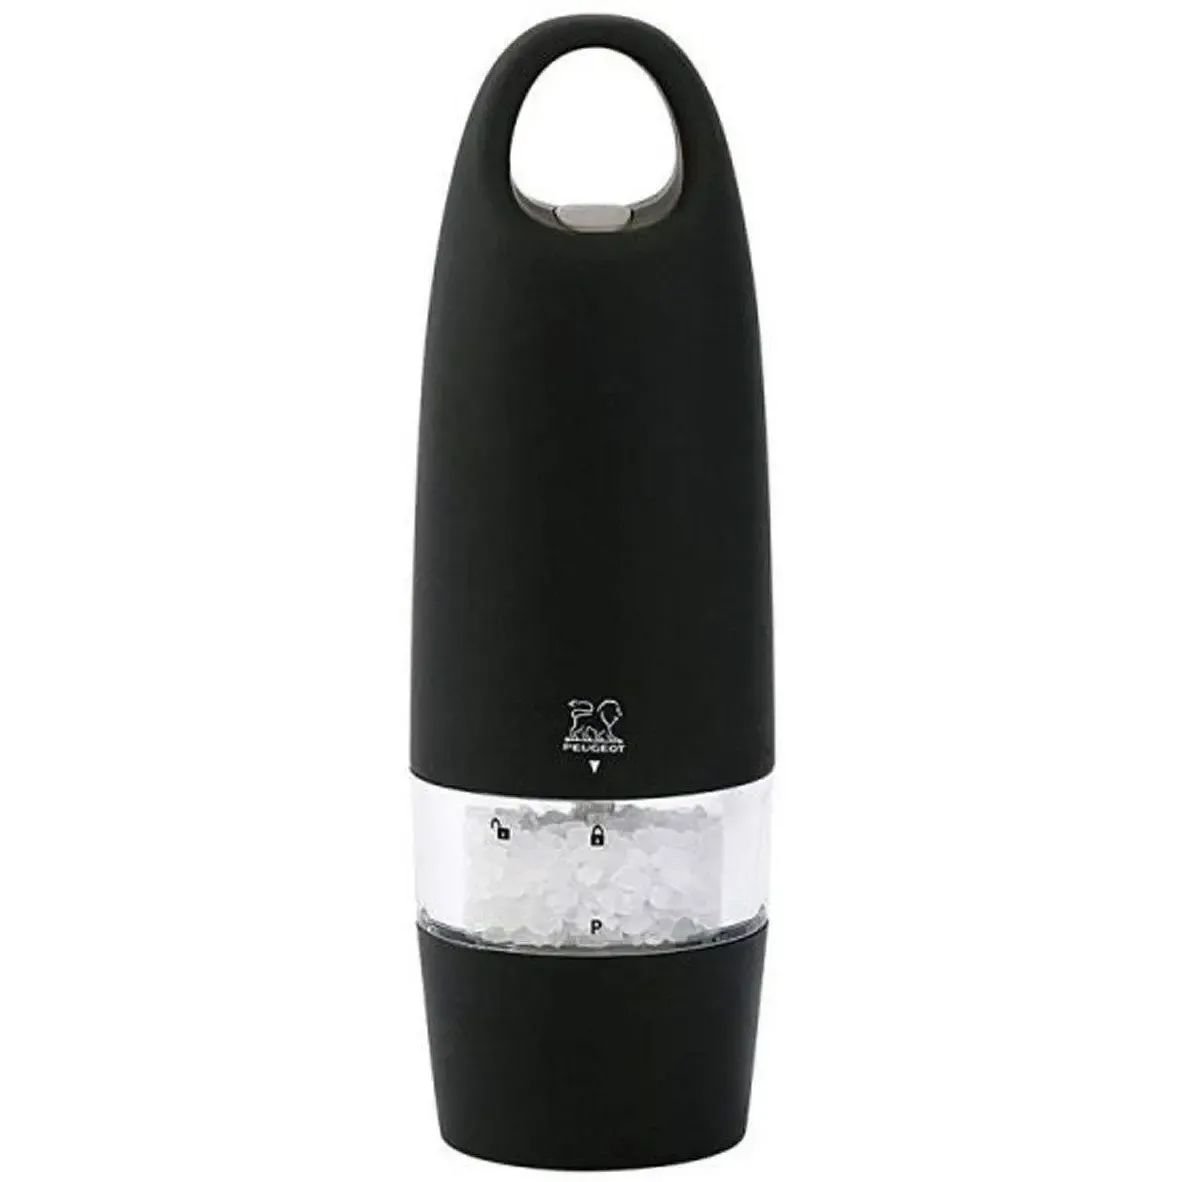 Млинок електричний для солi Peugeot Zest, 18 см, чорний (25939_BS) - фото 1